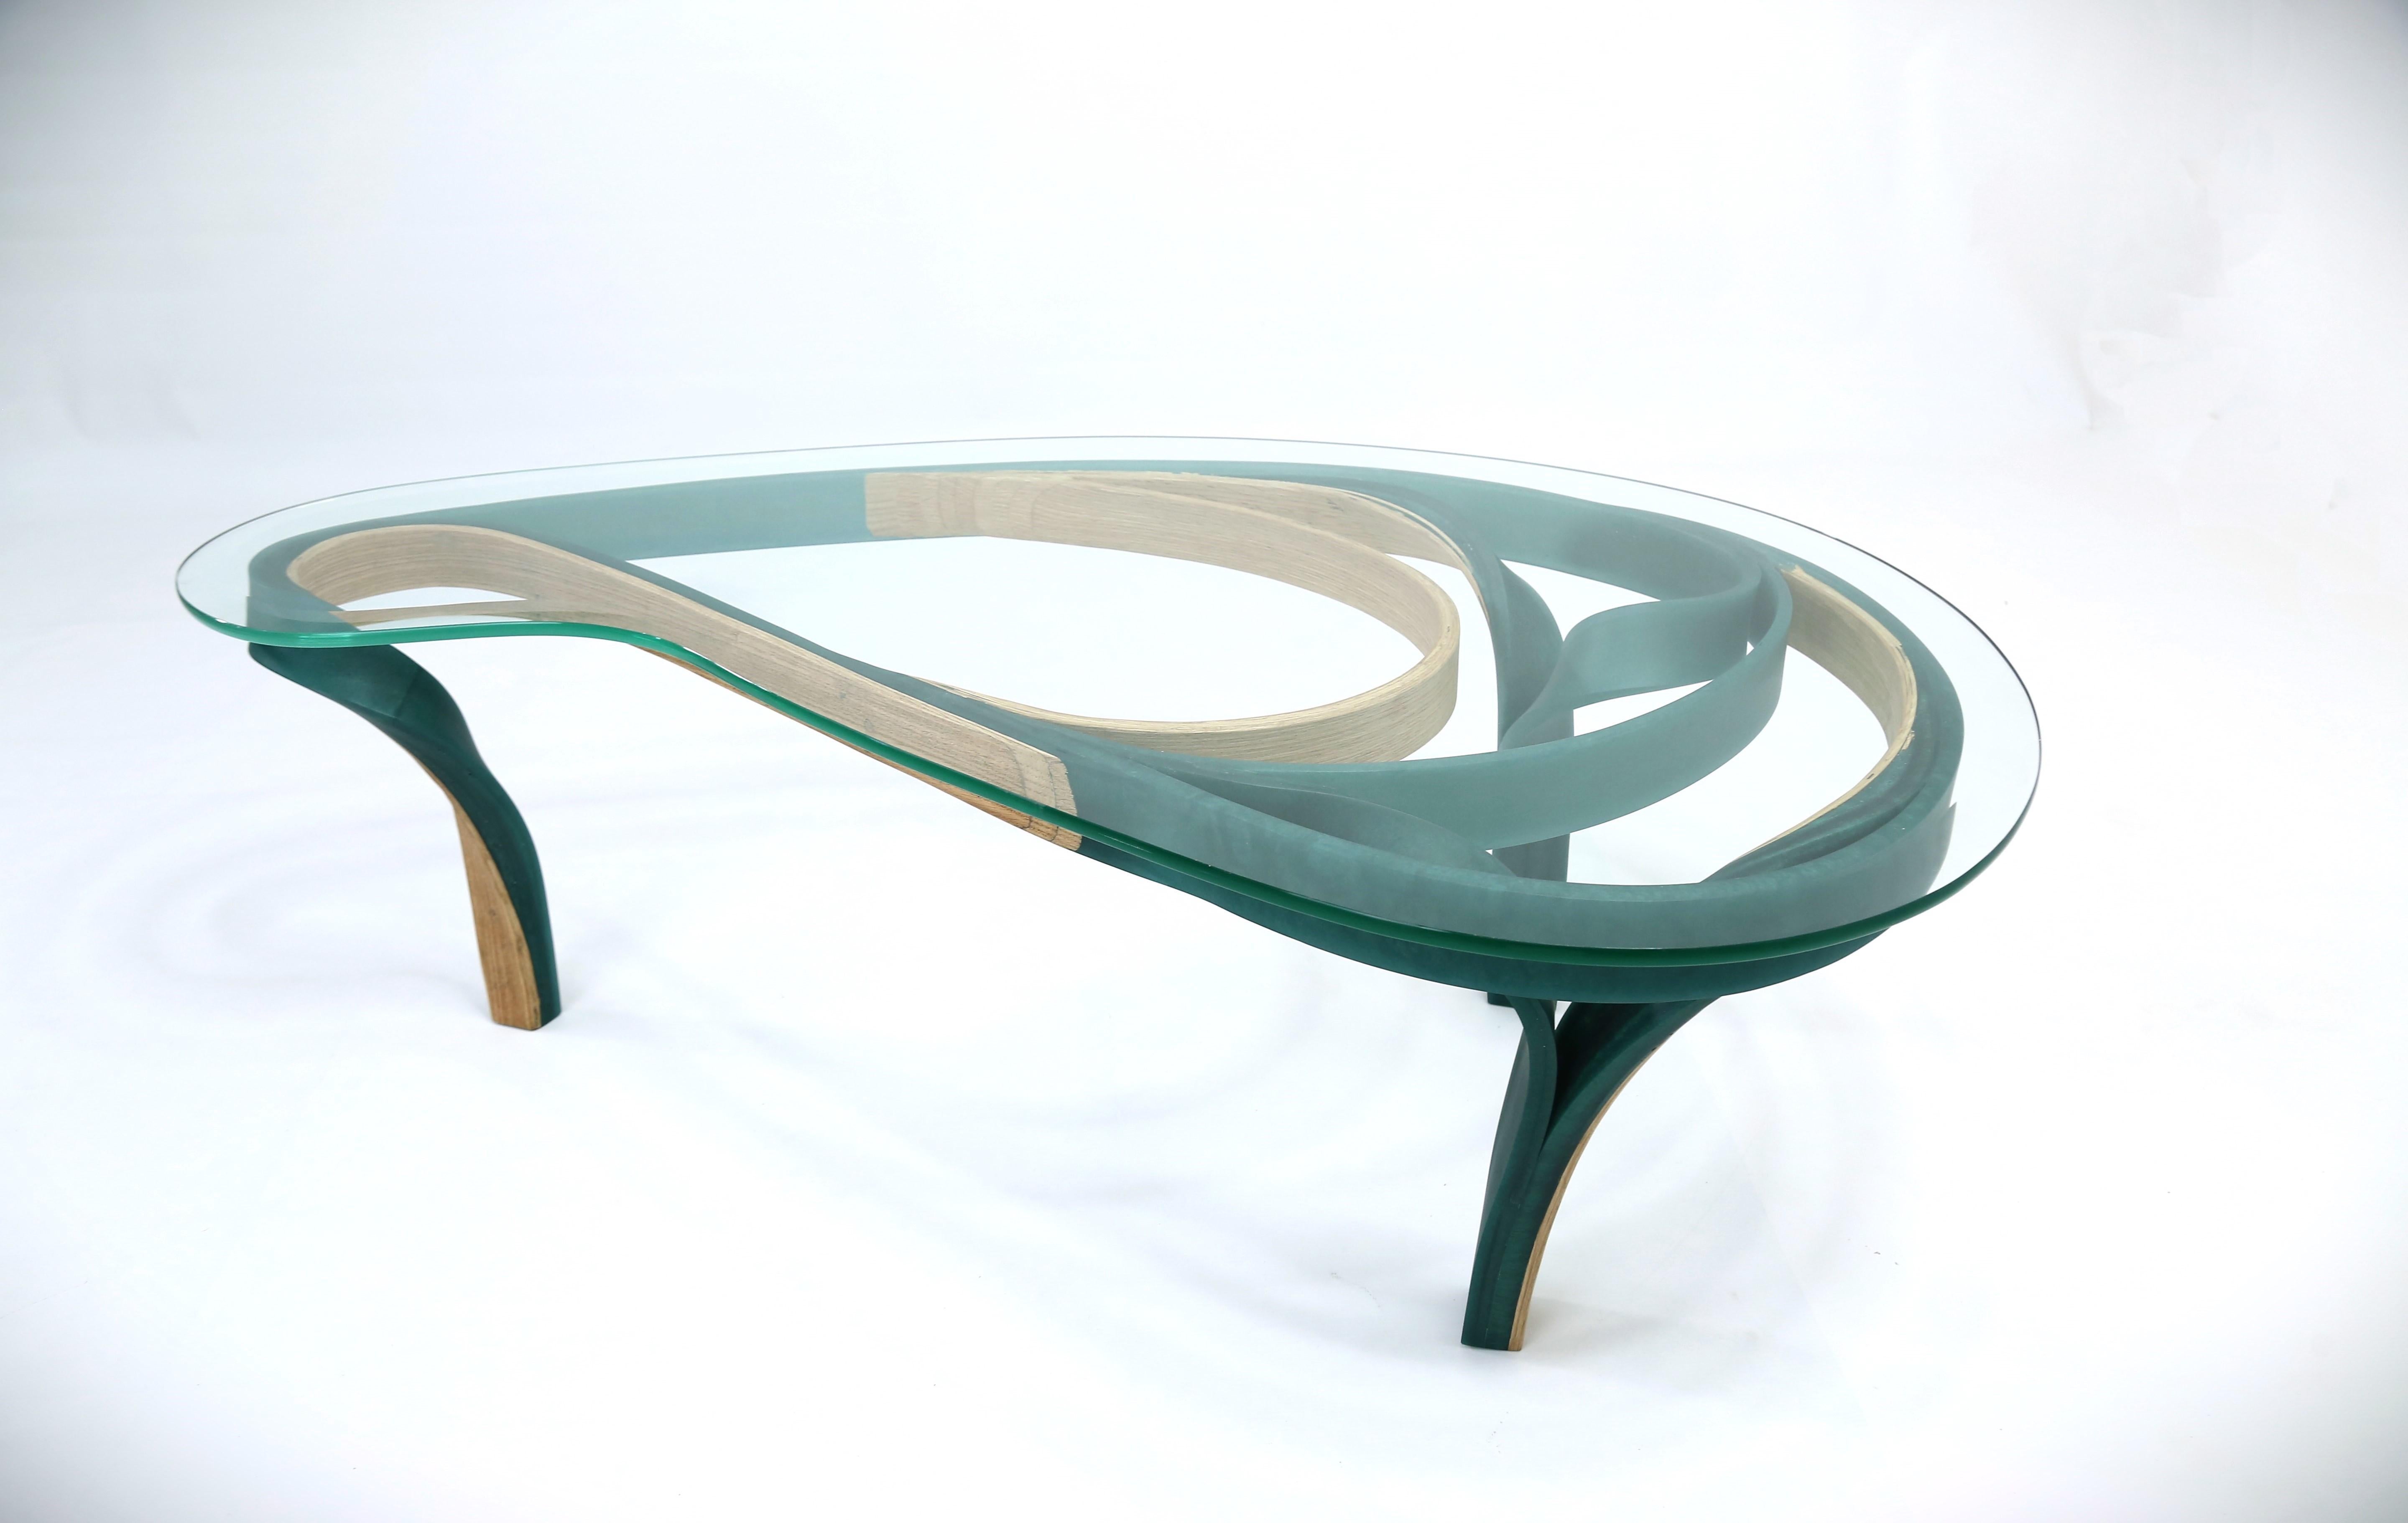 Woodwork Aquila Table by Raka Studio x Hamdi Studio - Green Resin and Ash Wood with Glass For Sale